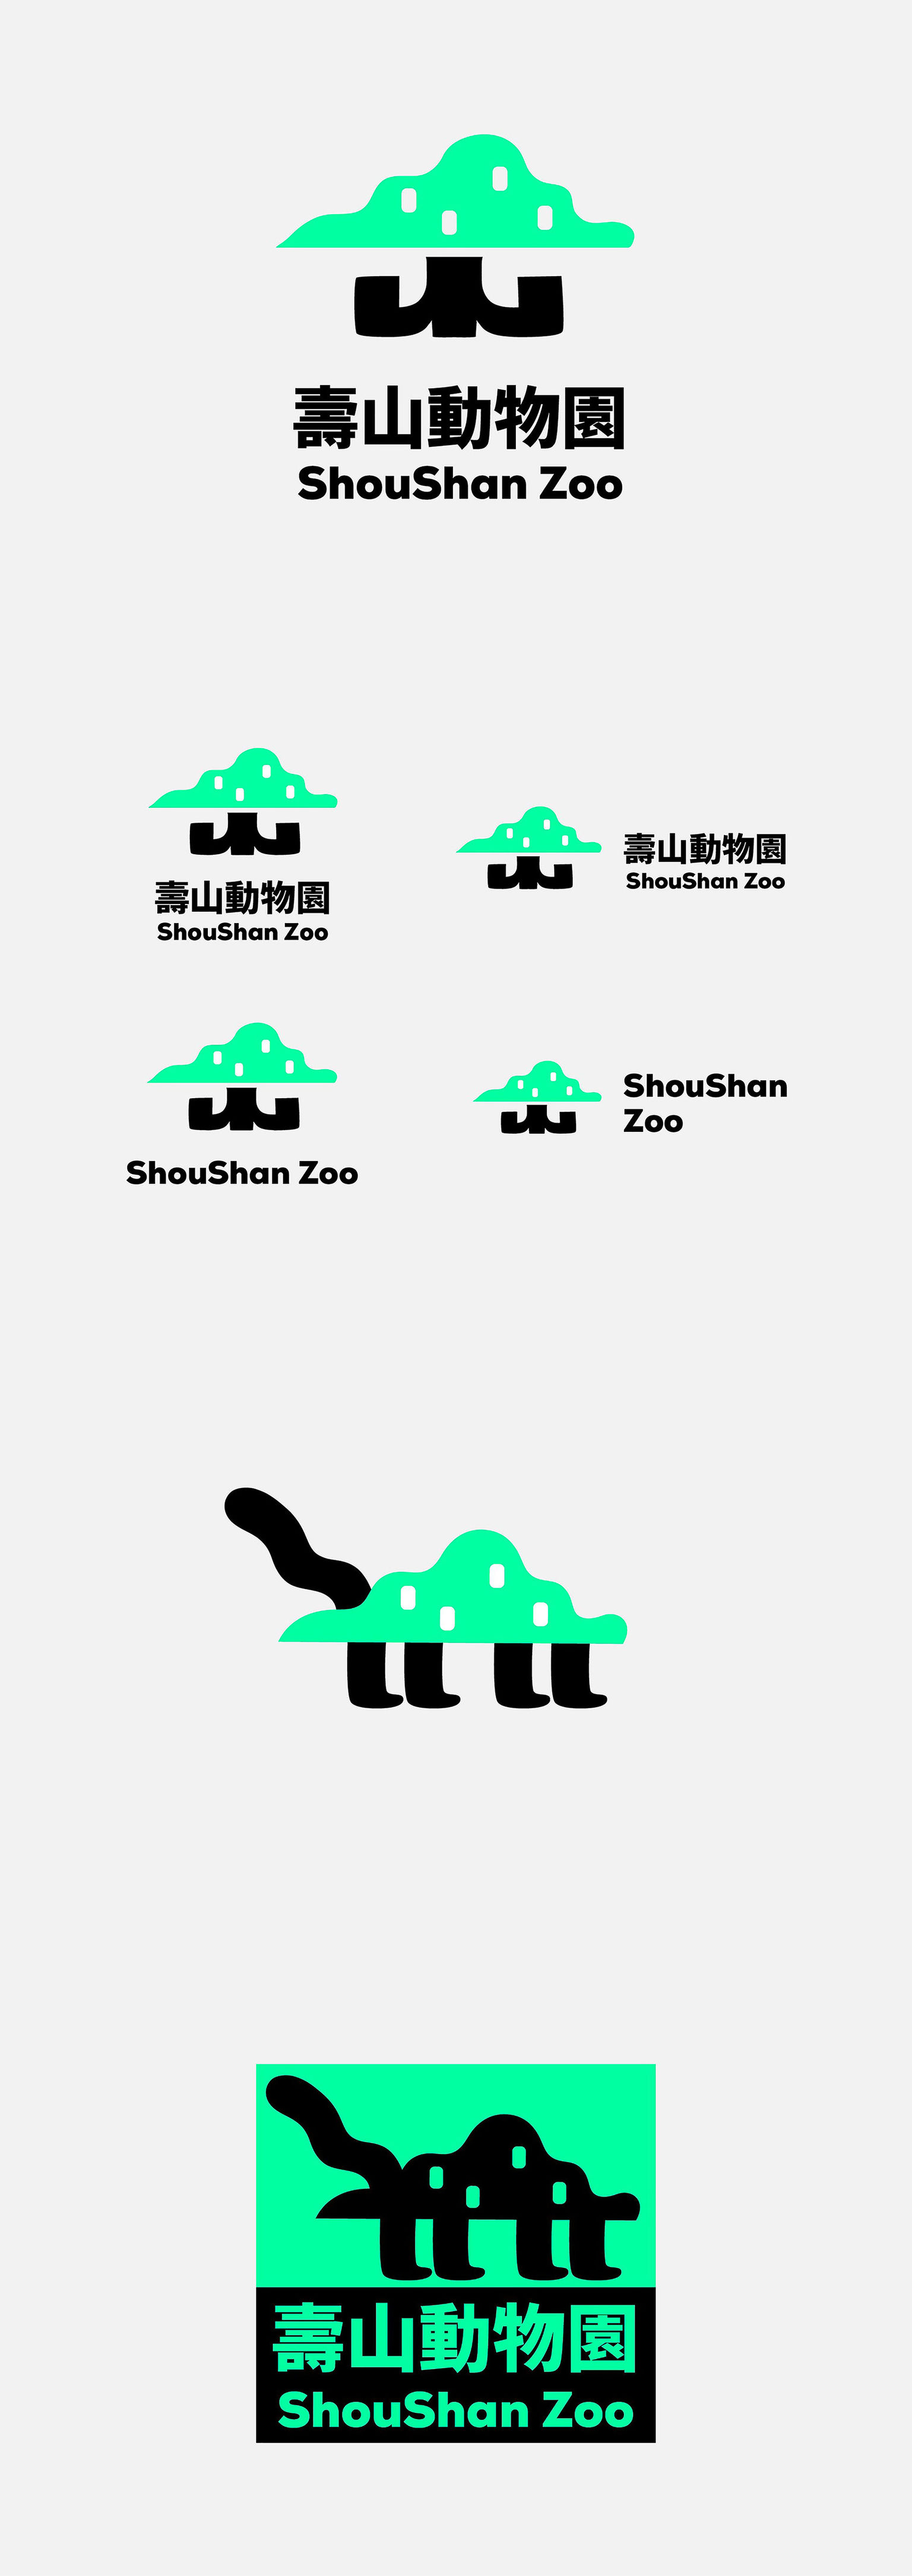 Shoushan Zoo Visual Identity Redesign